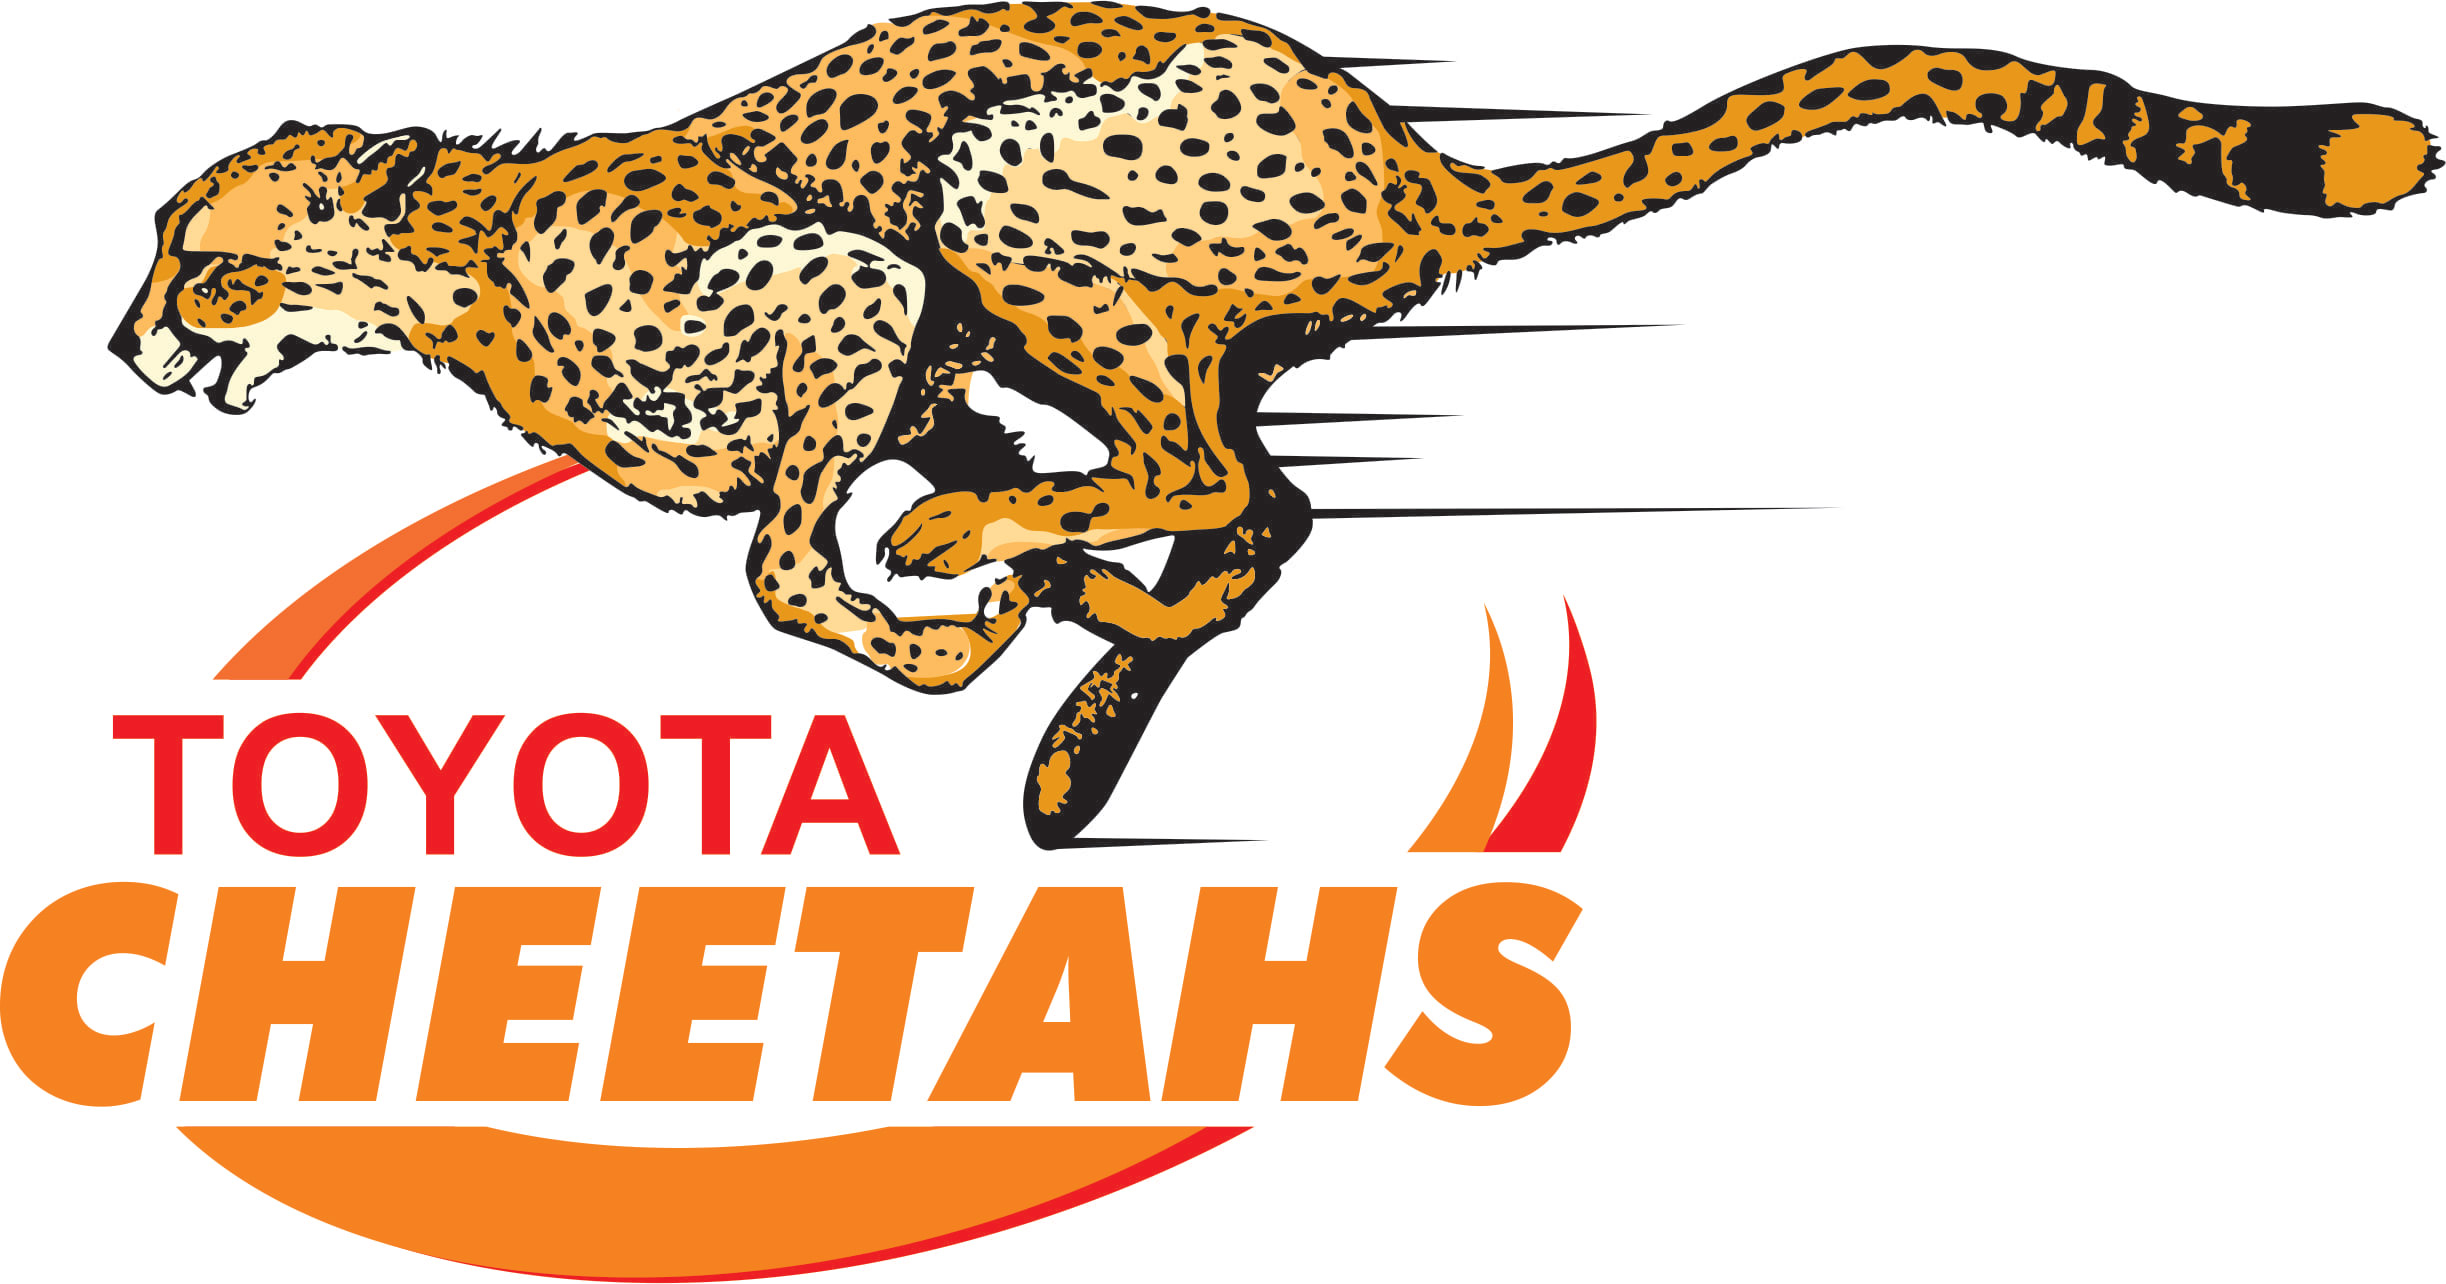 Toyota Cheetahs